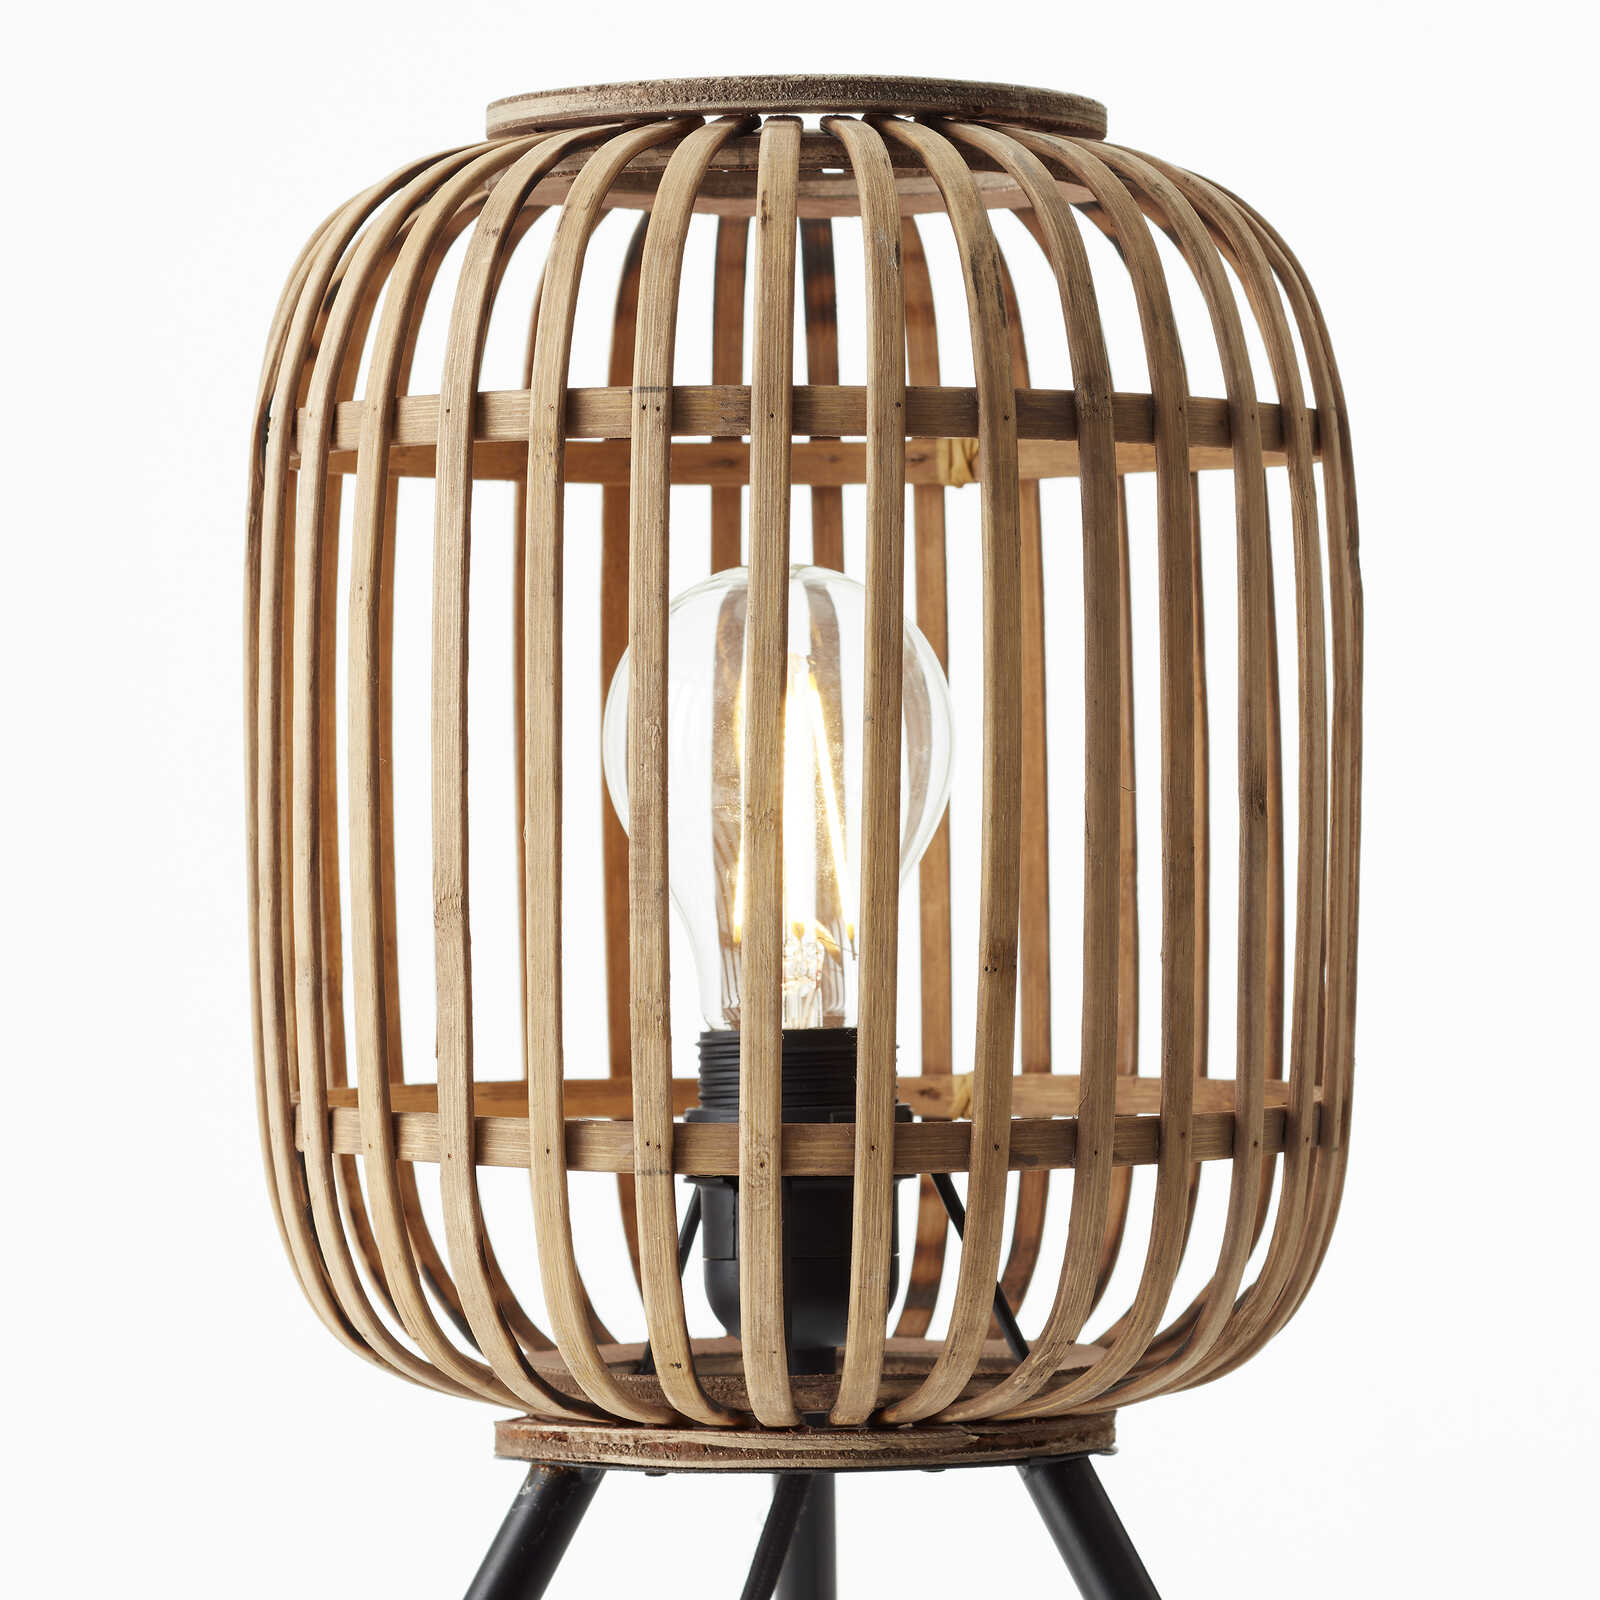             Bamboe tafellamp - Willi 2 - Bruin
        